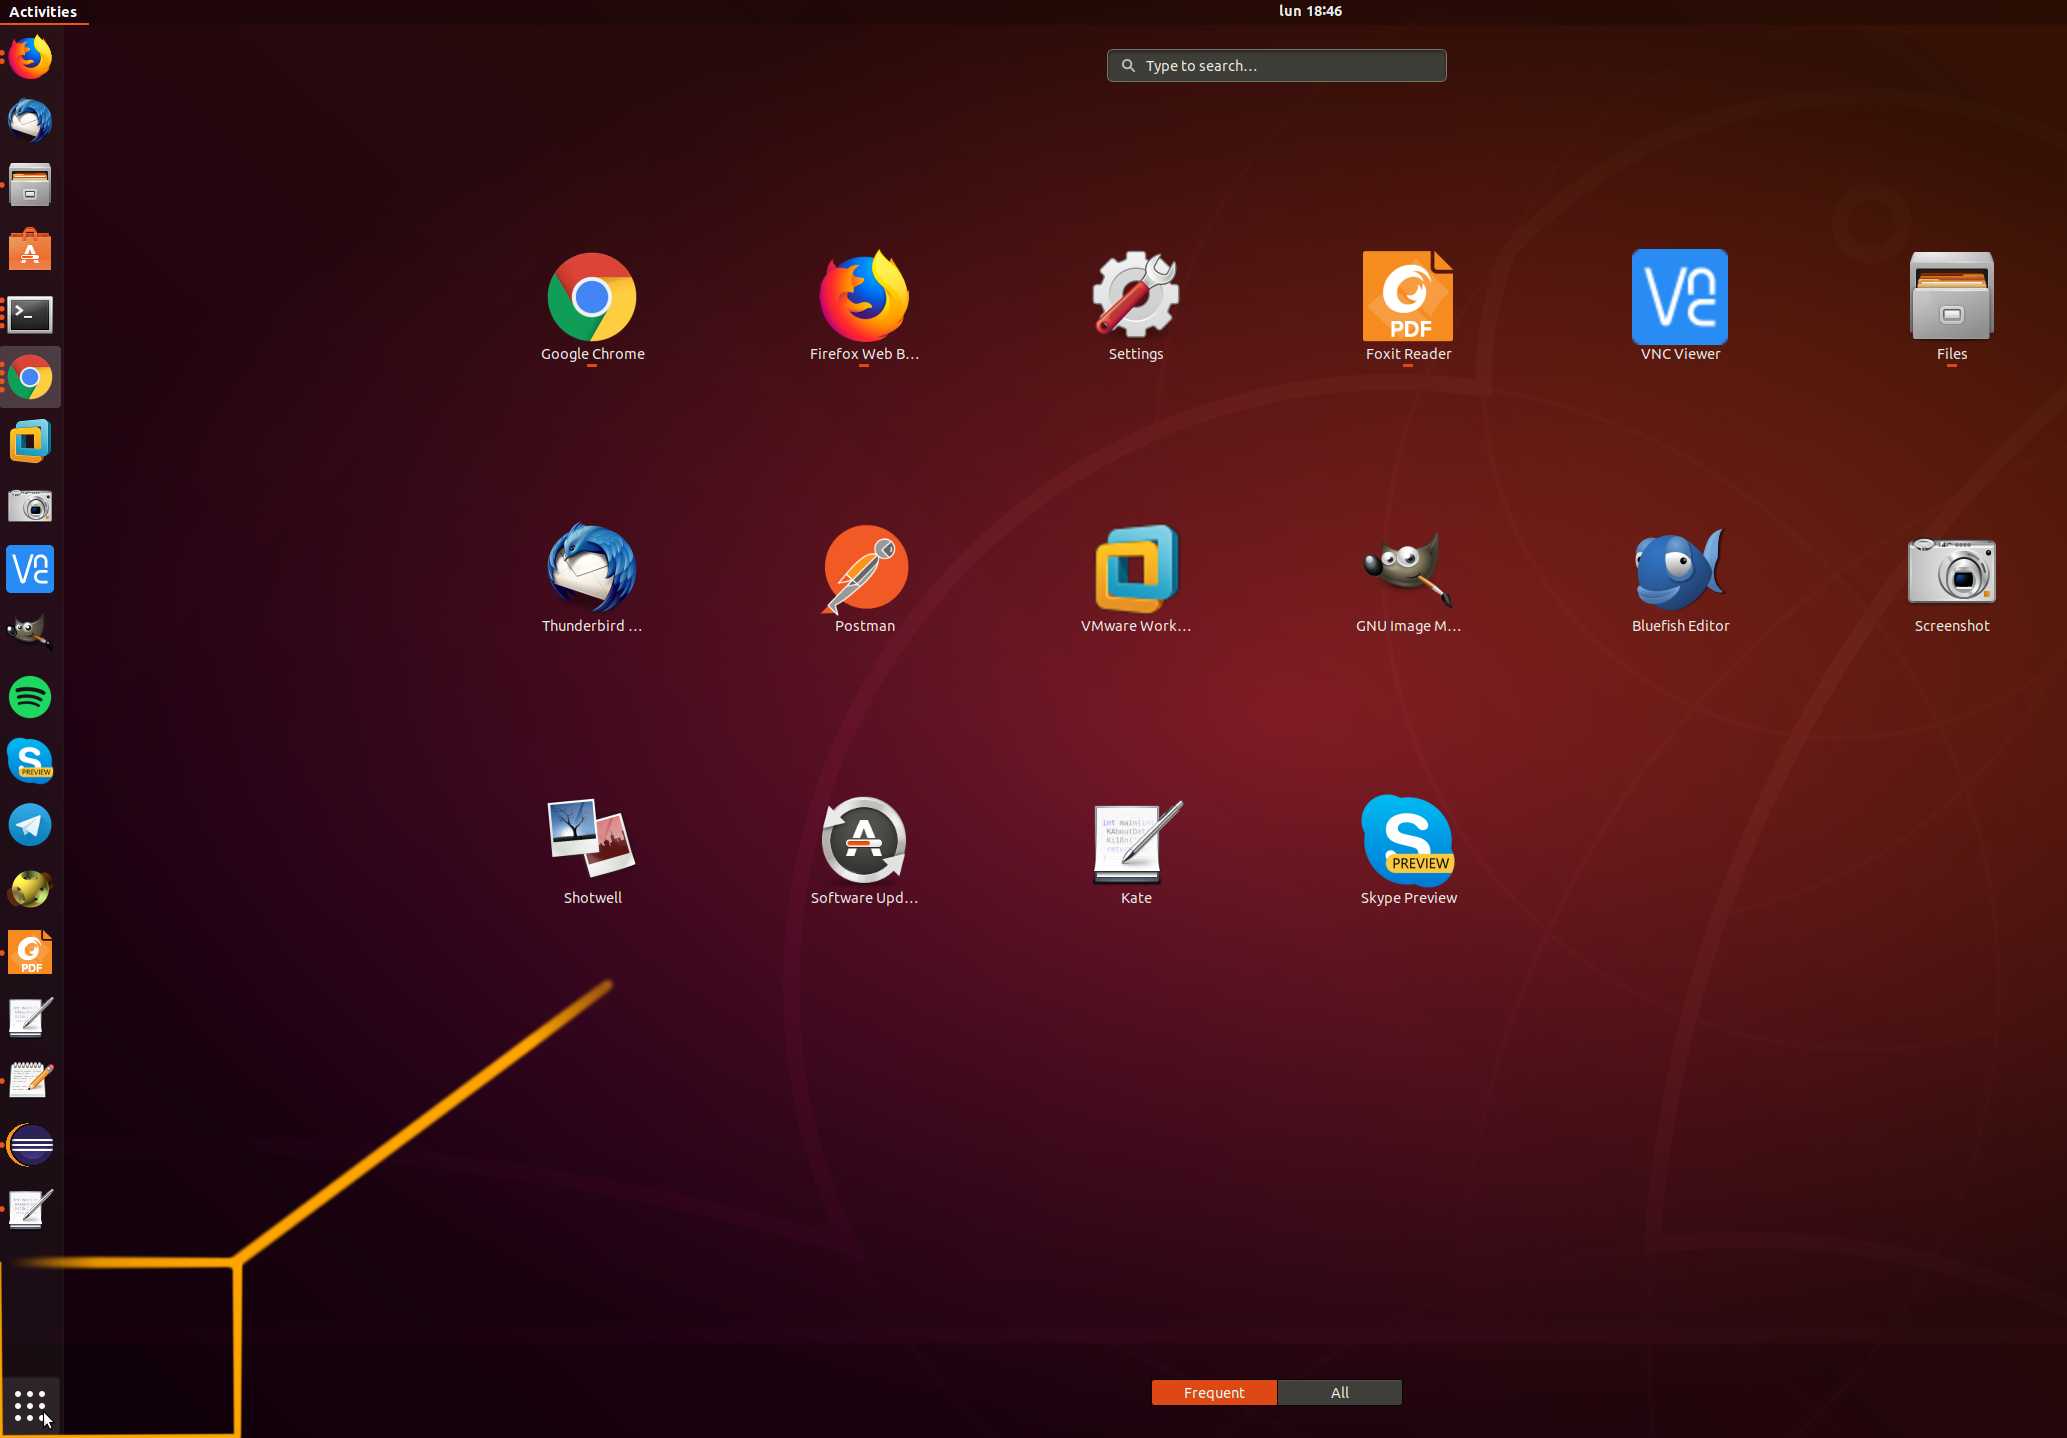 How to Install Ubuntu 18.04 Desktop on VMware Fusion VM - Ubuntu 18.04 Bionic Desktop